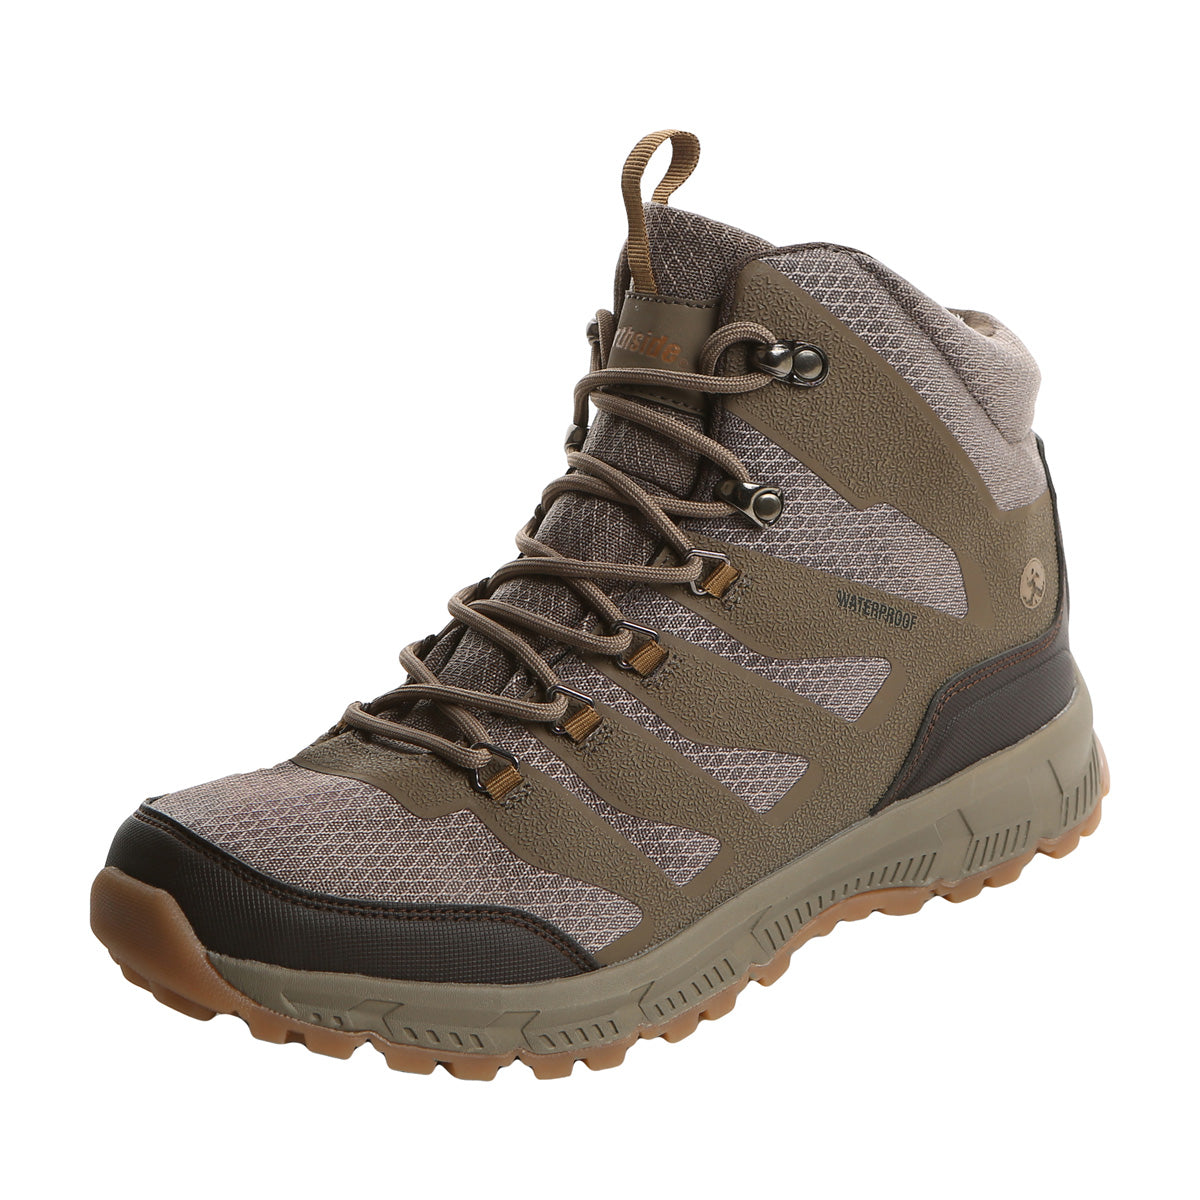 Men's Hargrove Mid Waterproof Hiking Boots